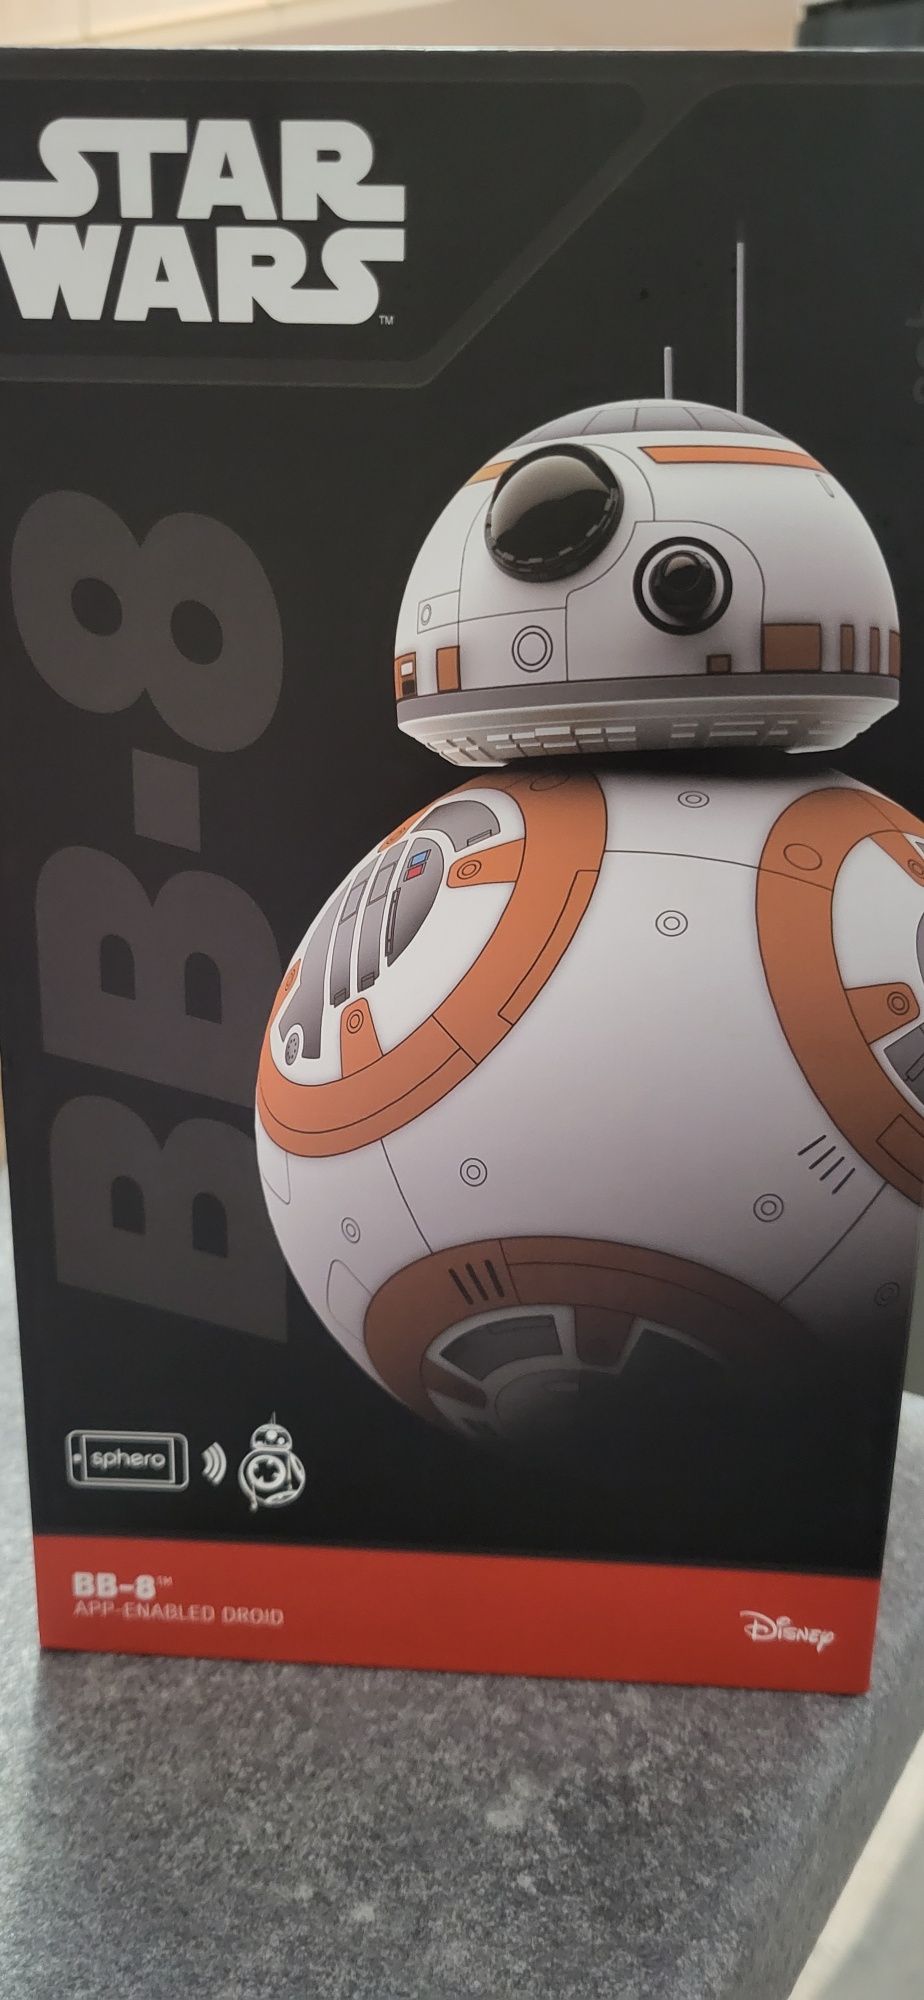 Vand Star Wars robot BB-8 original